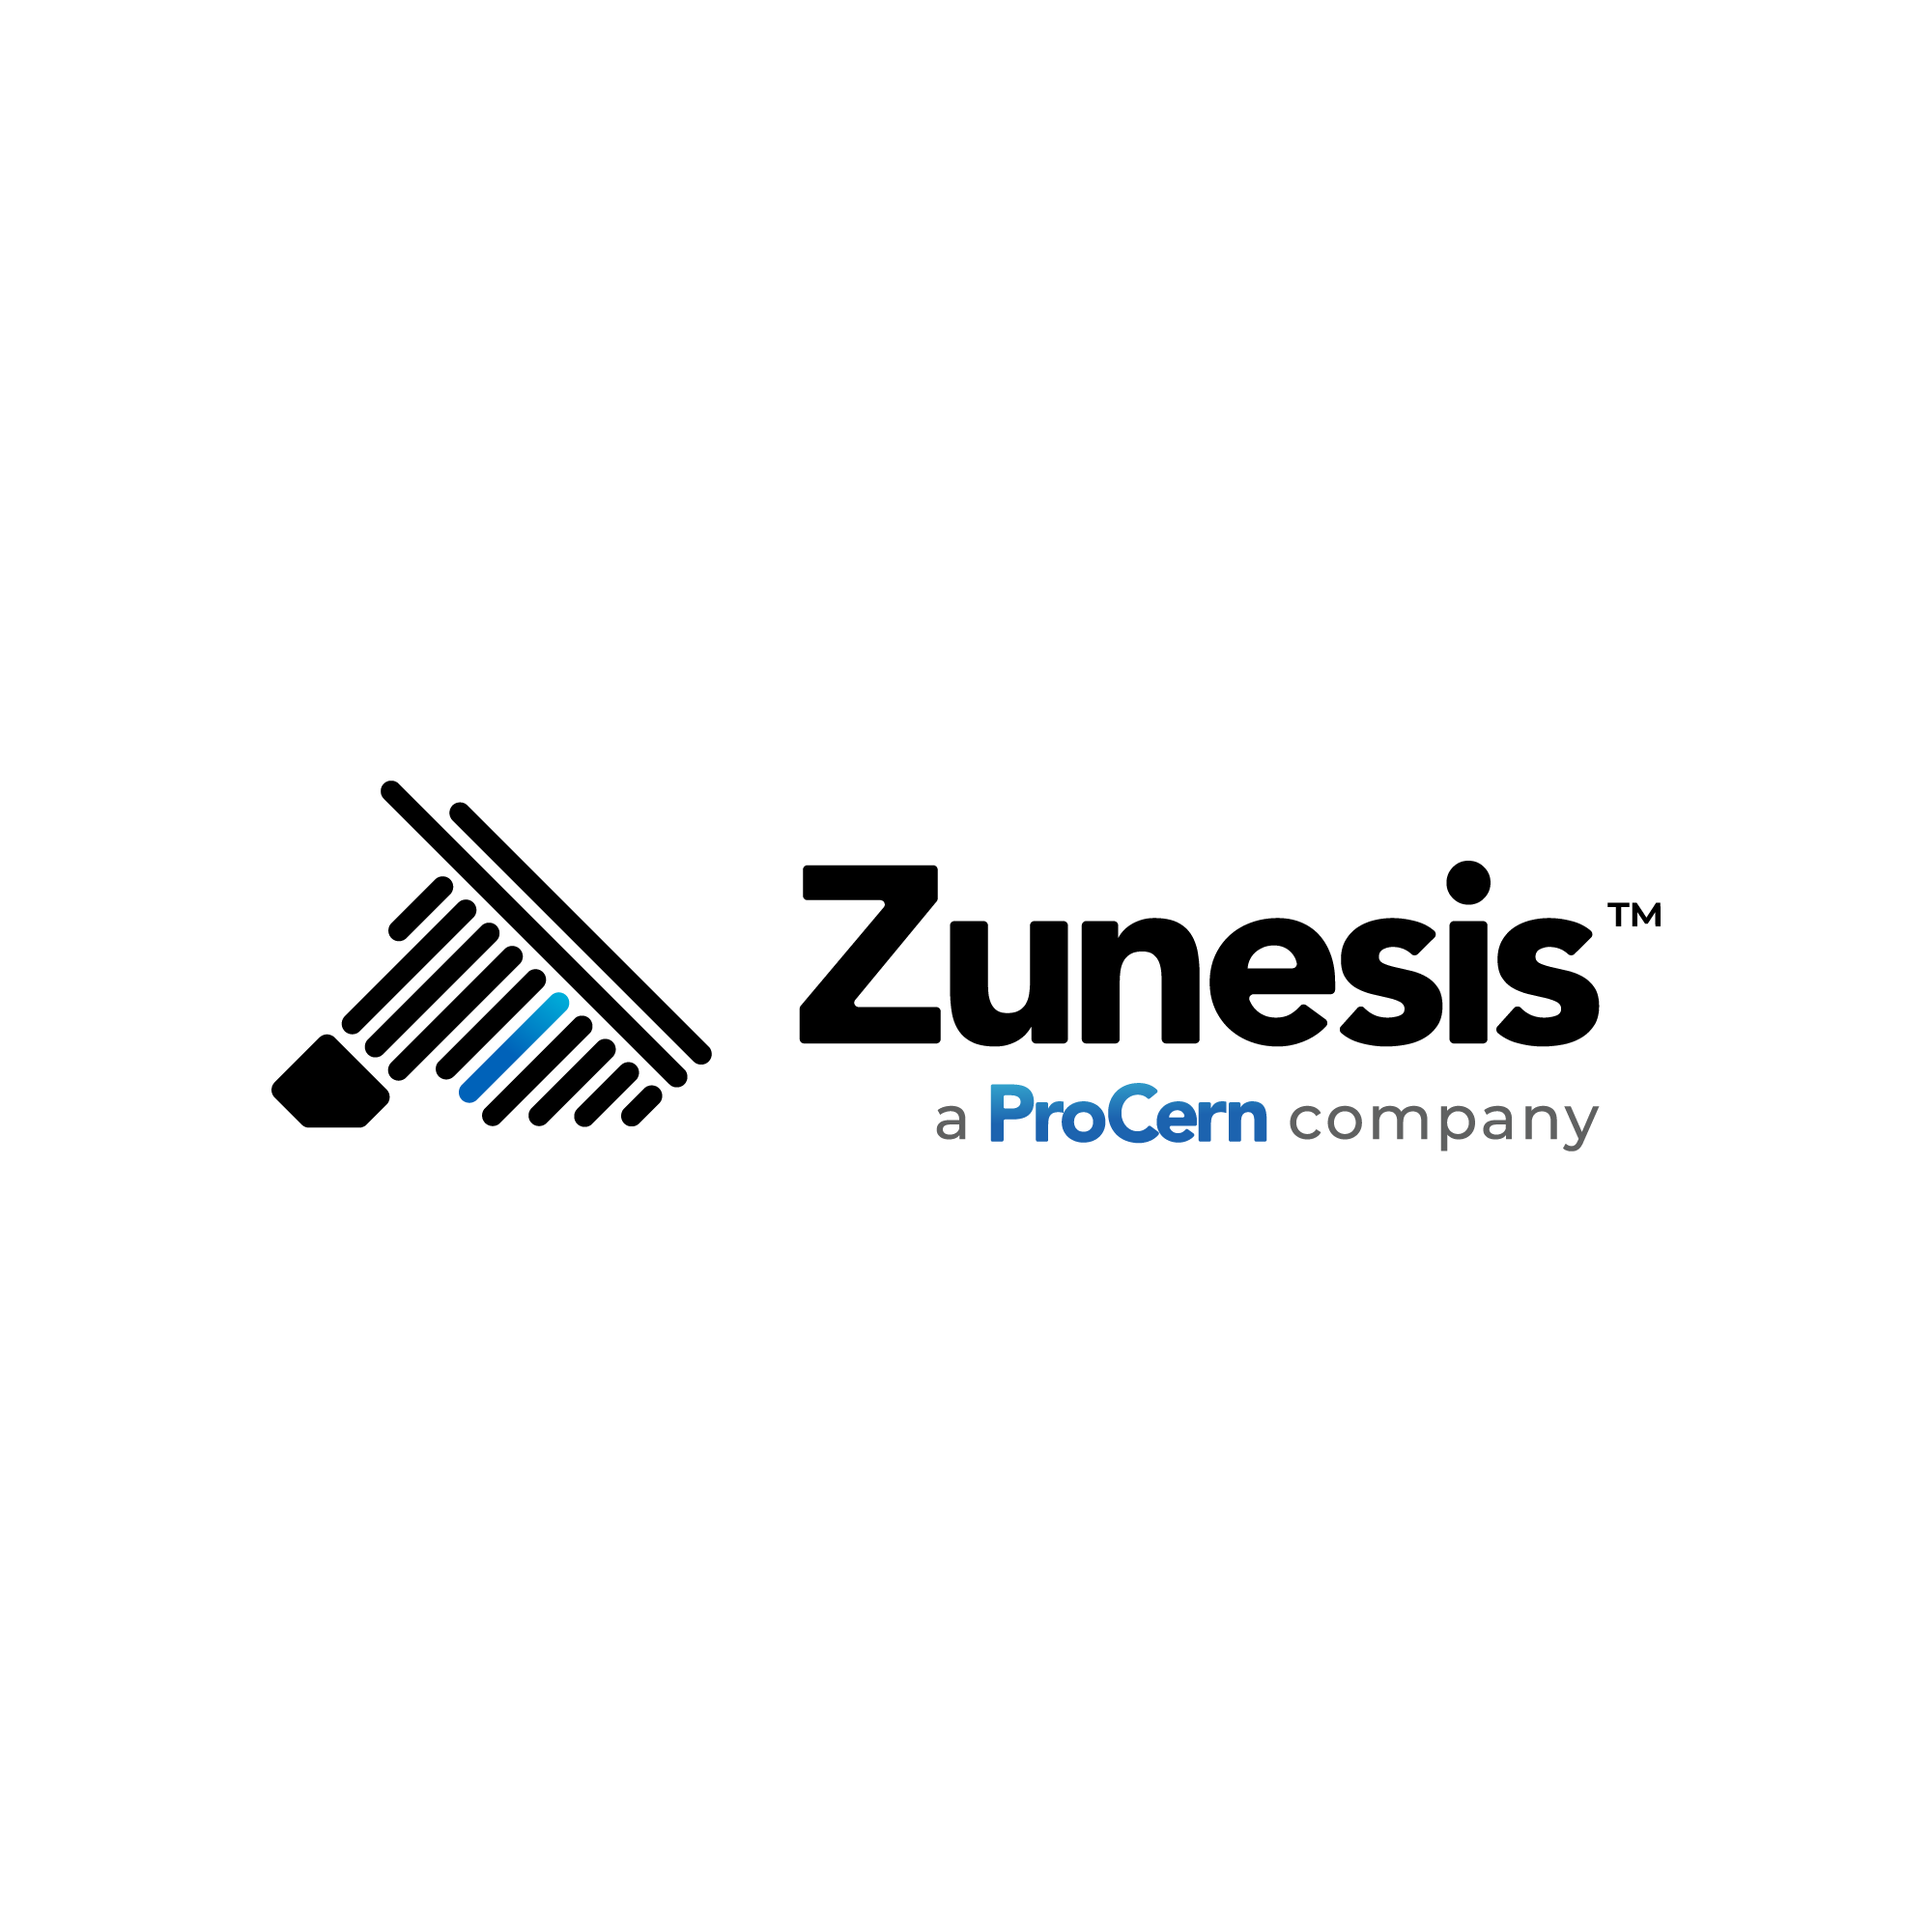 Zunesis a ProCern company logo